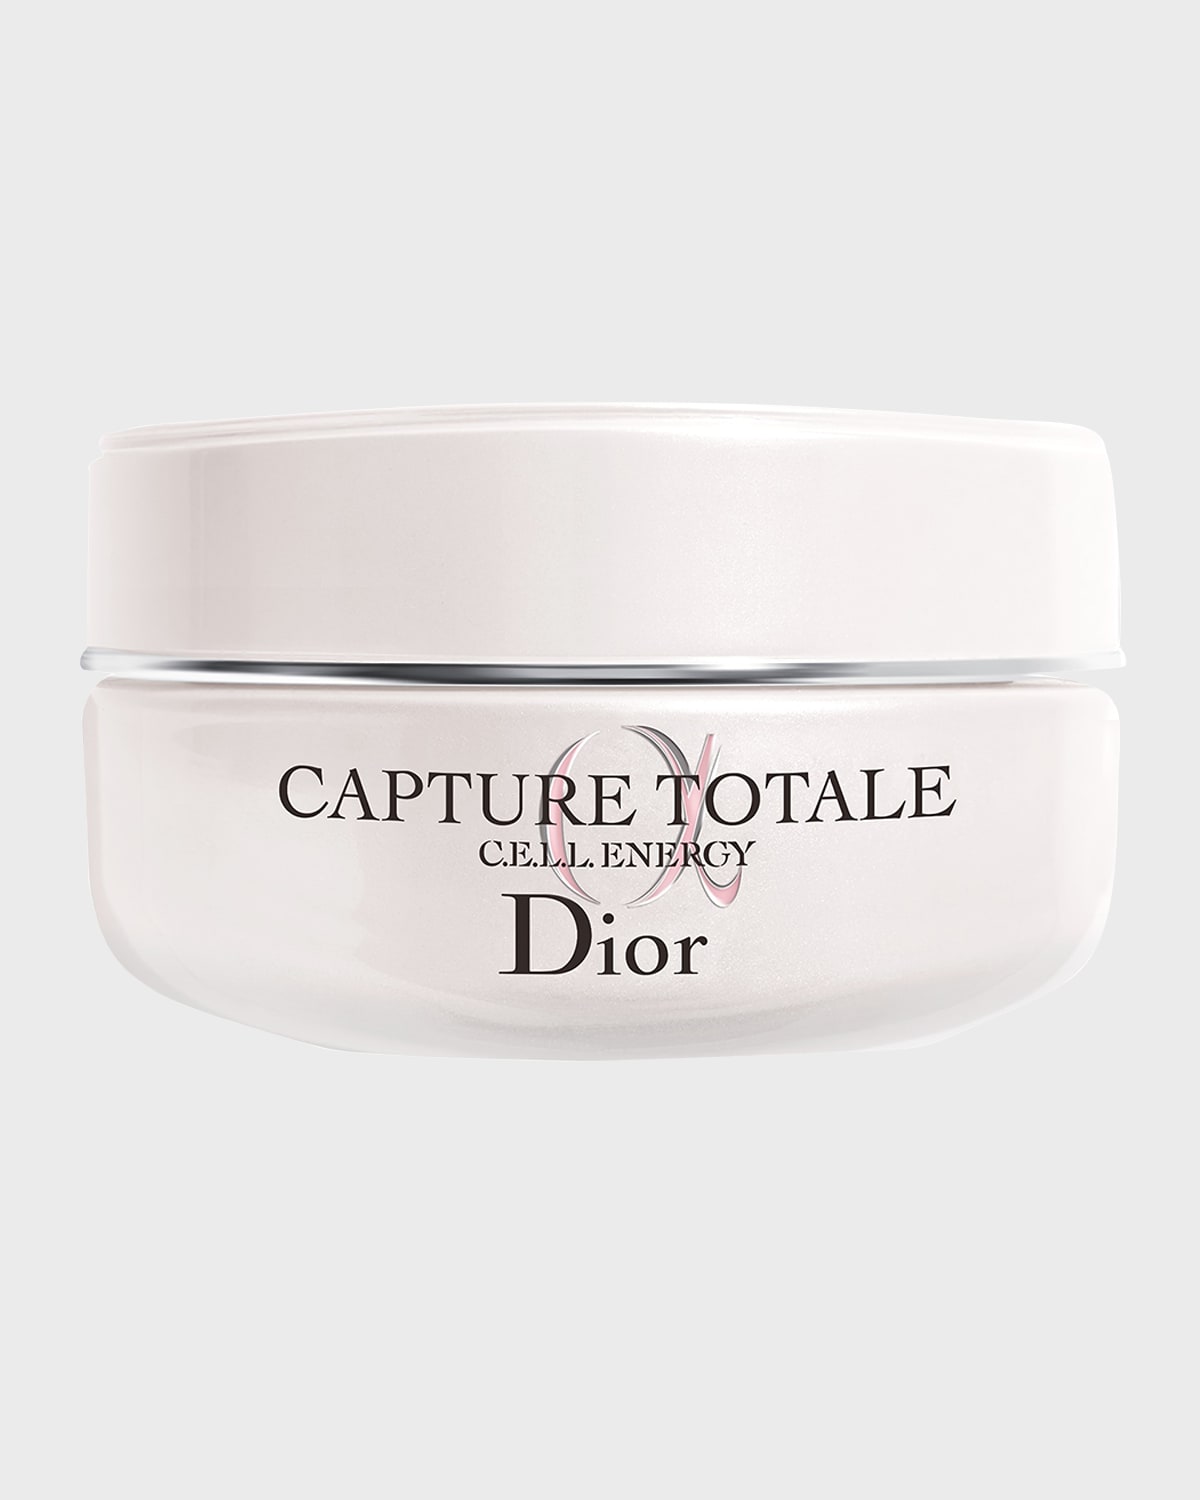 Capture Totale Firming & Wrinkle-Correcting Eye Cream, 0.5 oz.